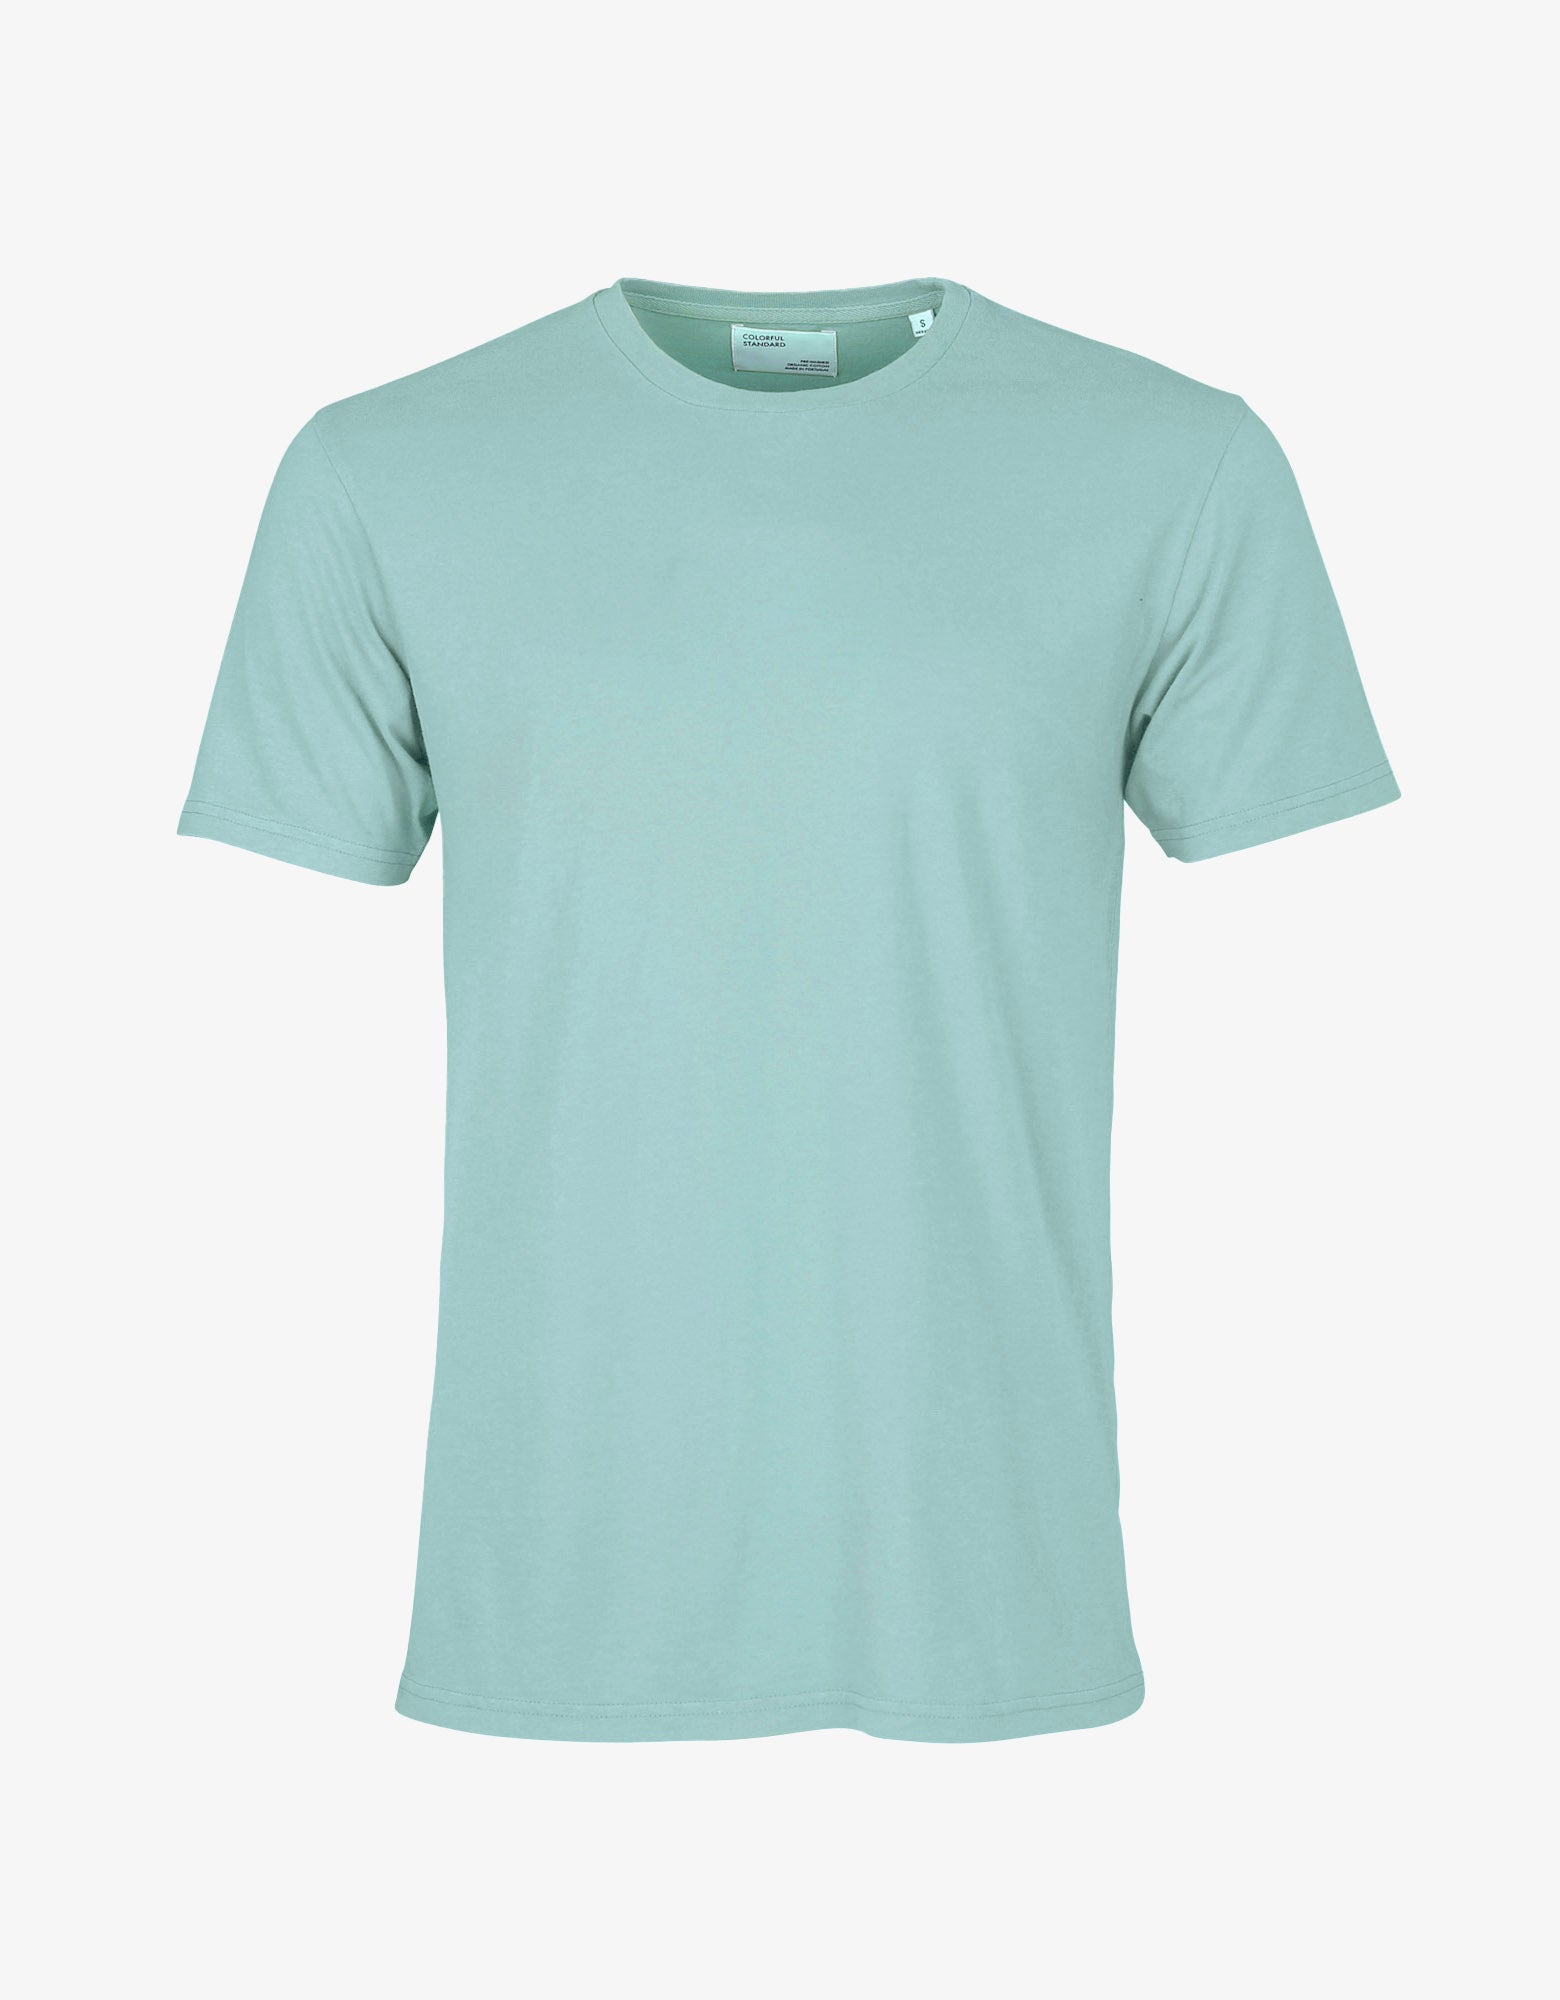 Teal Blue Classic Organic T Shirt UNISEX